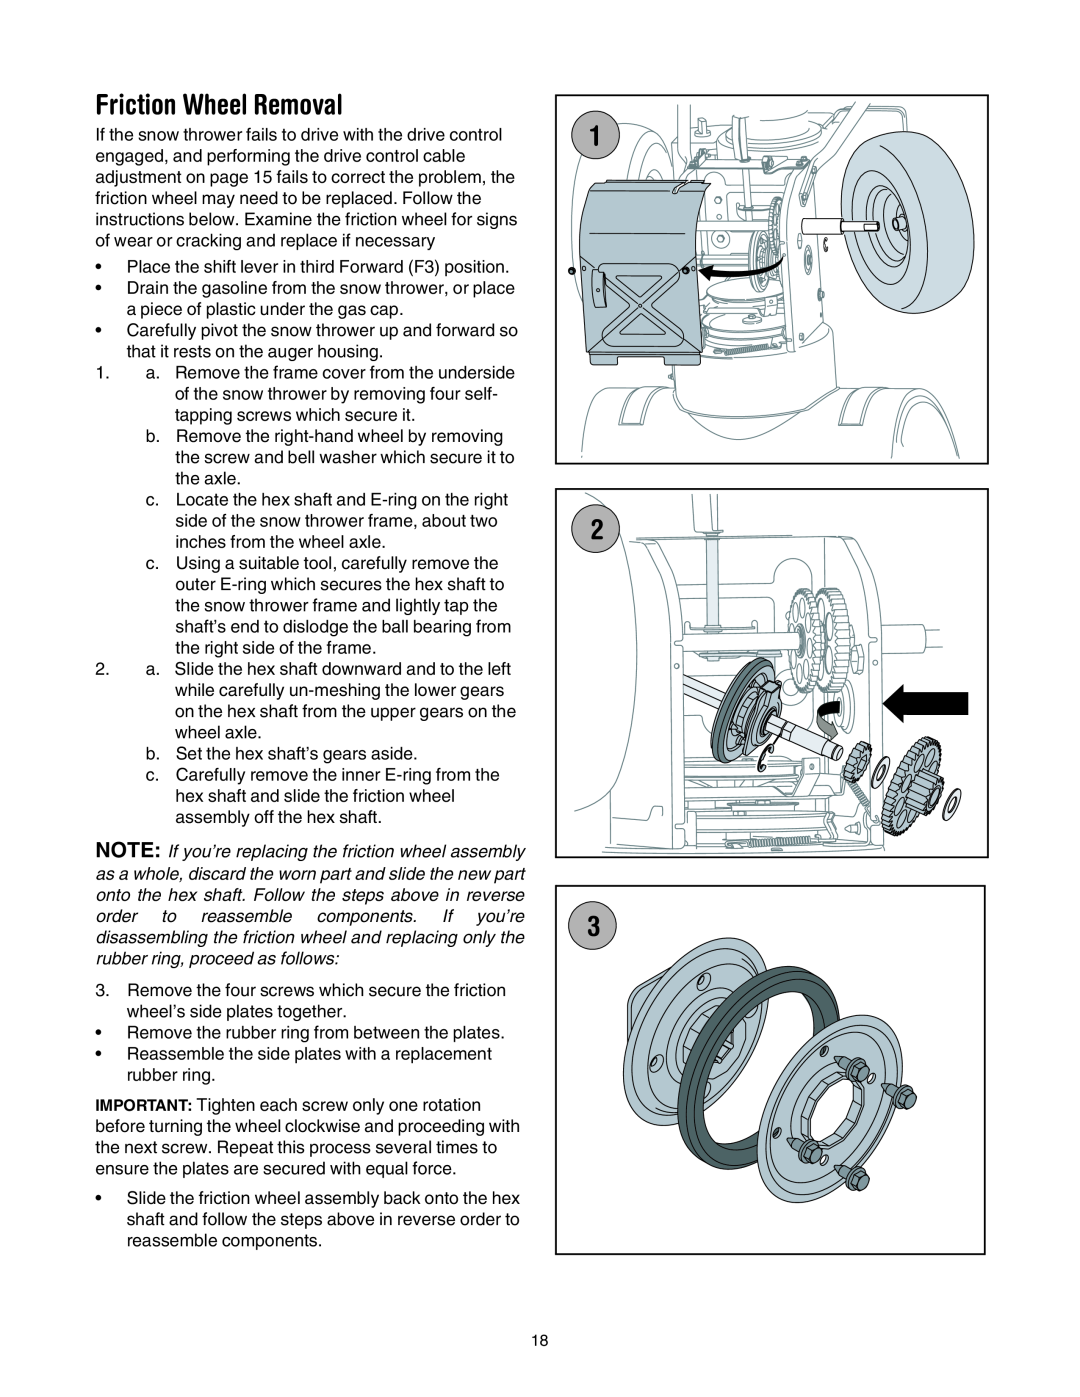 MTD 6DE manual Friction Wheel Removal 